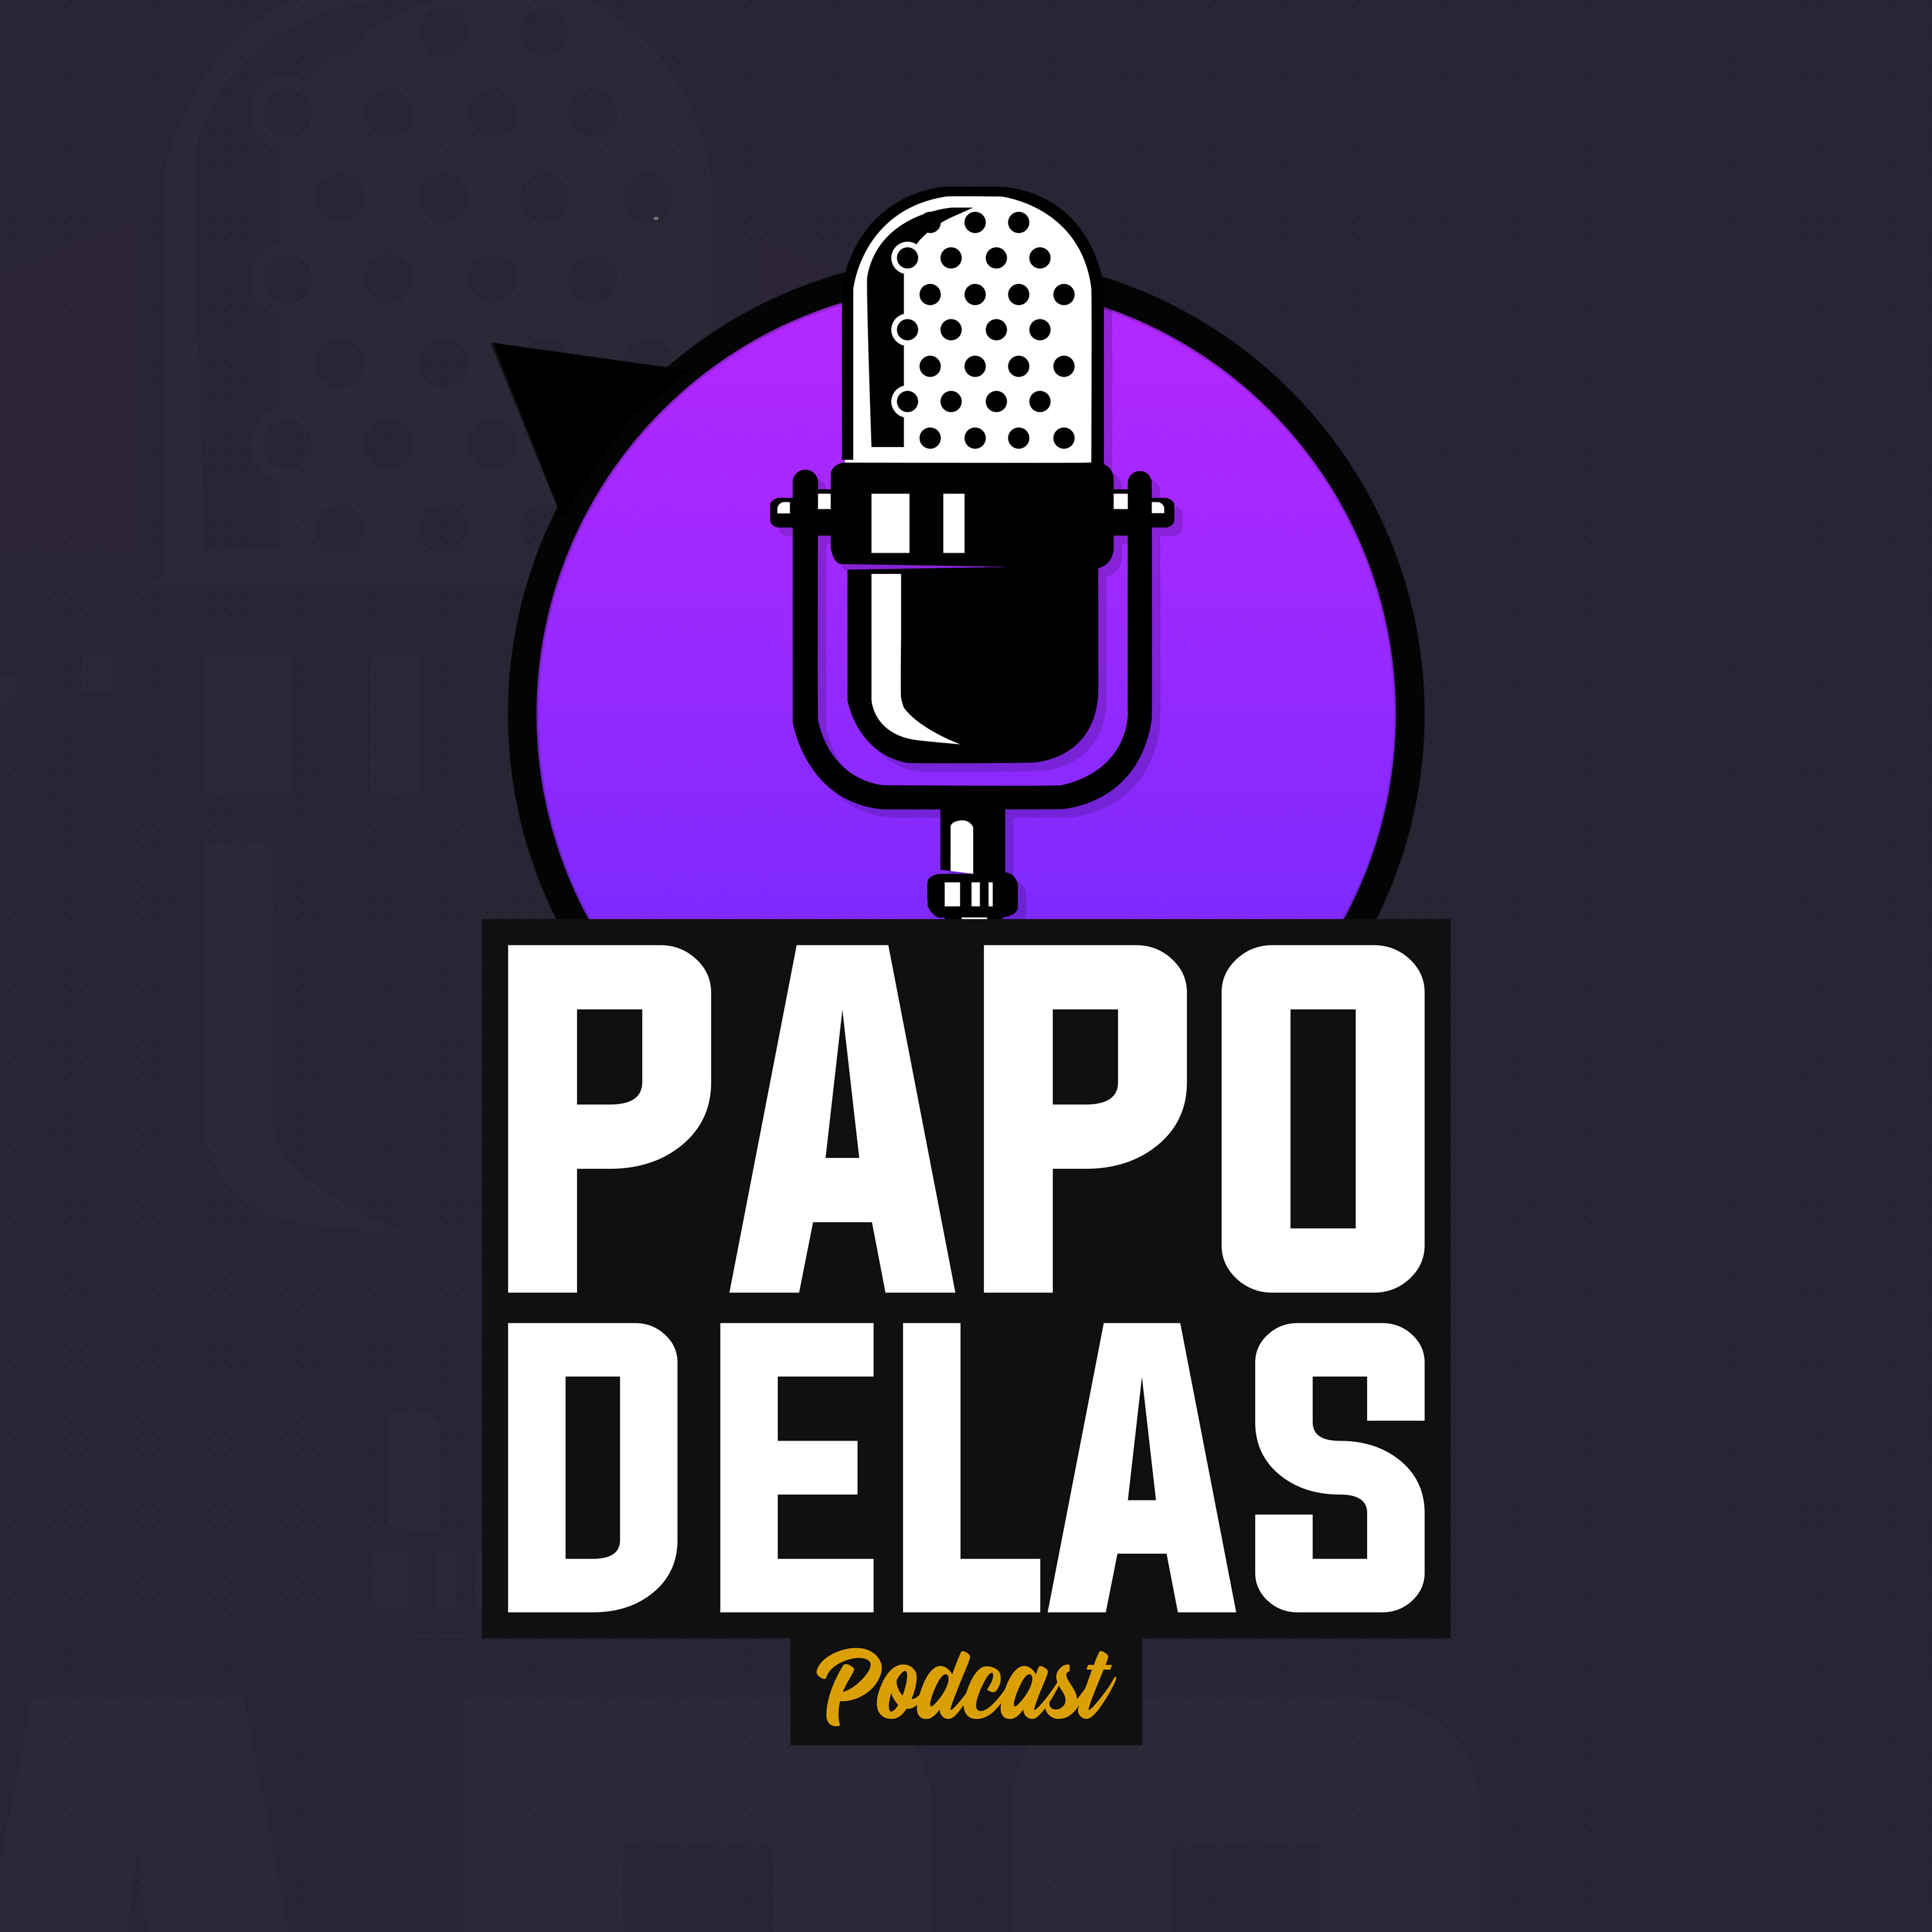 Papo Delas Podcast